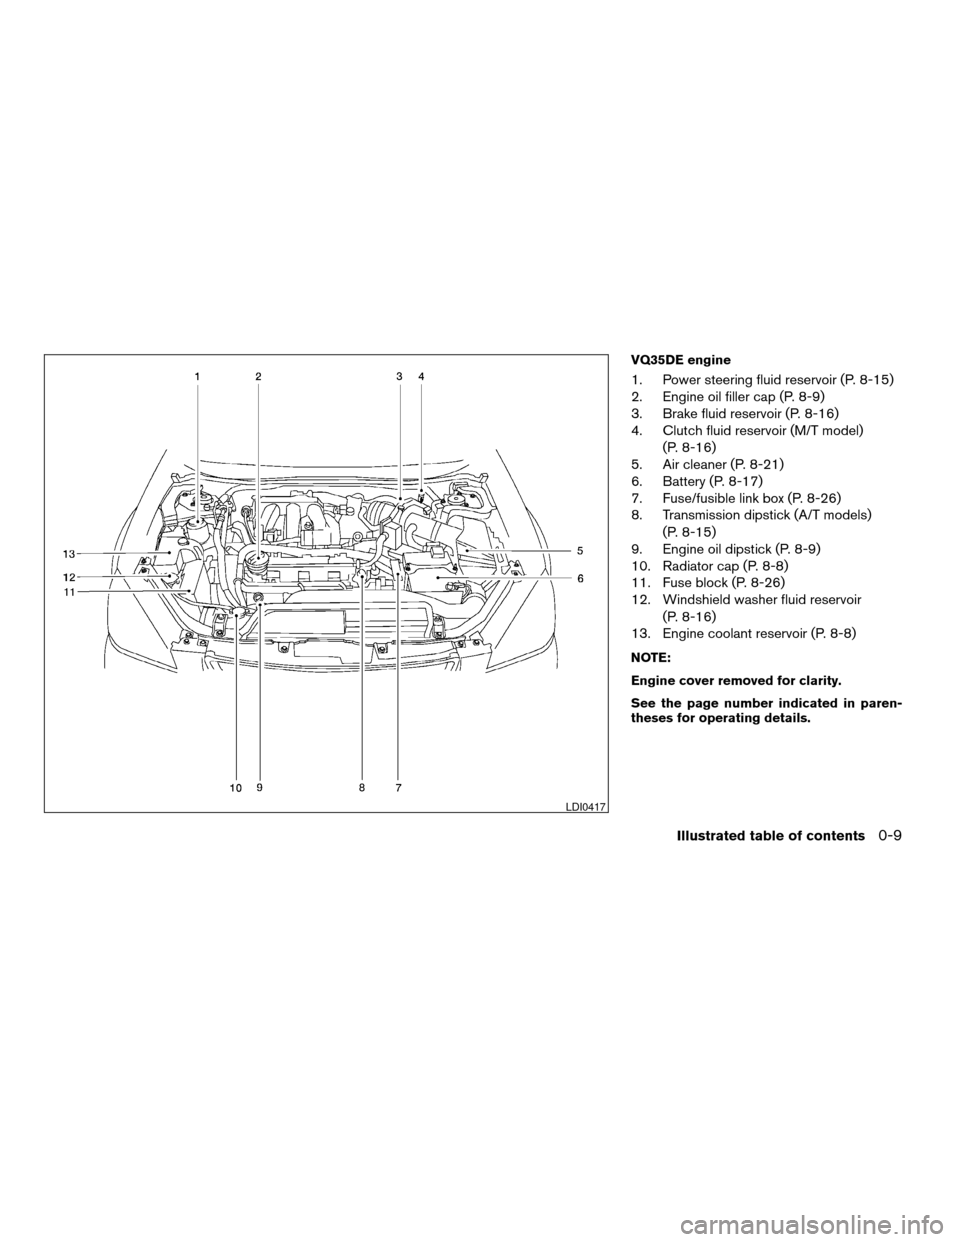 NISSAN ALTIMA 2005 L31 / 3.G Owners Manual VQ35DE engine
1. Power steering fluid reservoir (P. 8-15)
2. Engine oil filler cap (P. 8-9)
3. Brake fluid reservoir (P. 8-16)
4. Clutch fluid reservoir (M/T model)(P. 8-16)
5. Air cleaner (P. 8-21)
6